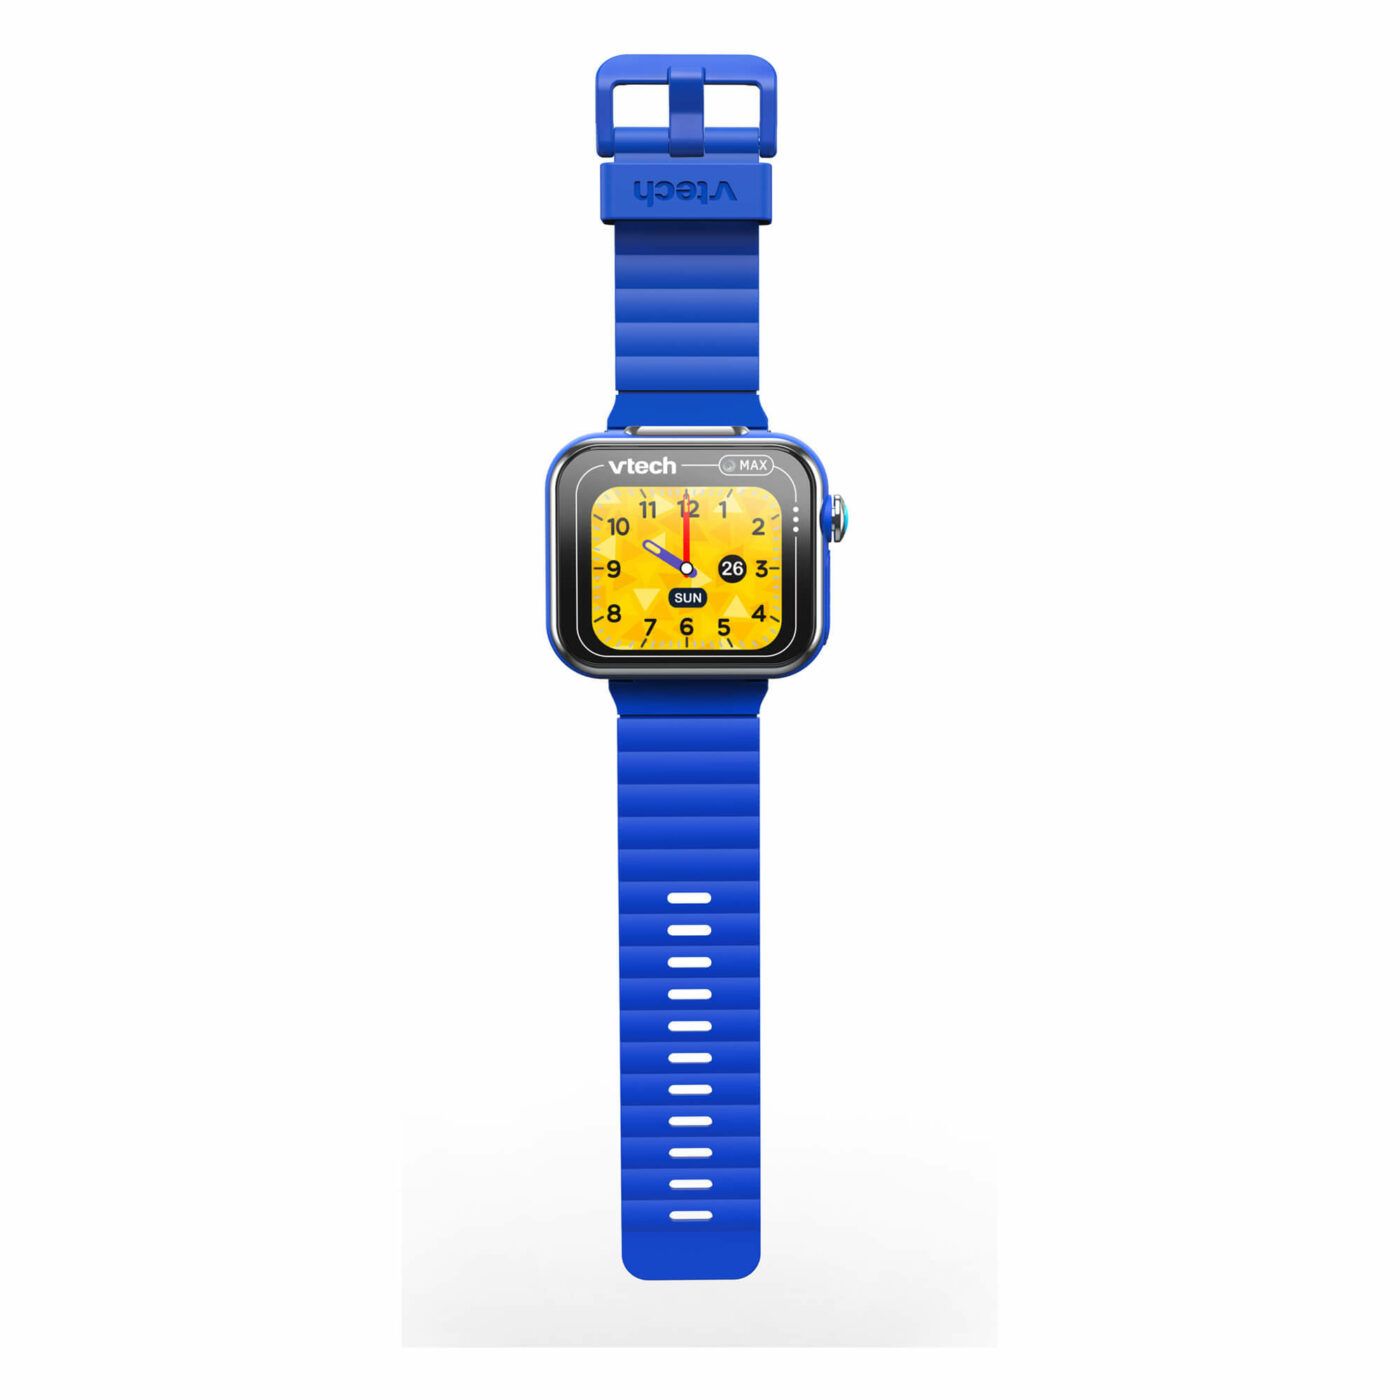 Vtech - Kidizoom Smart Watch Max - Blue3